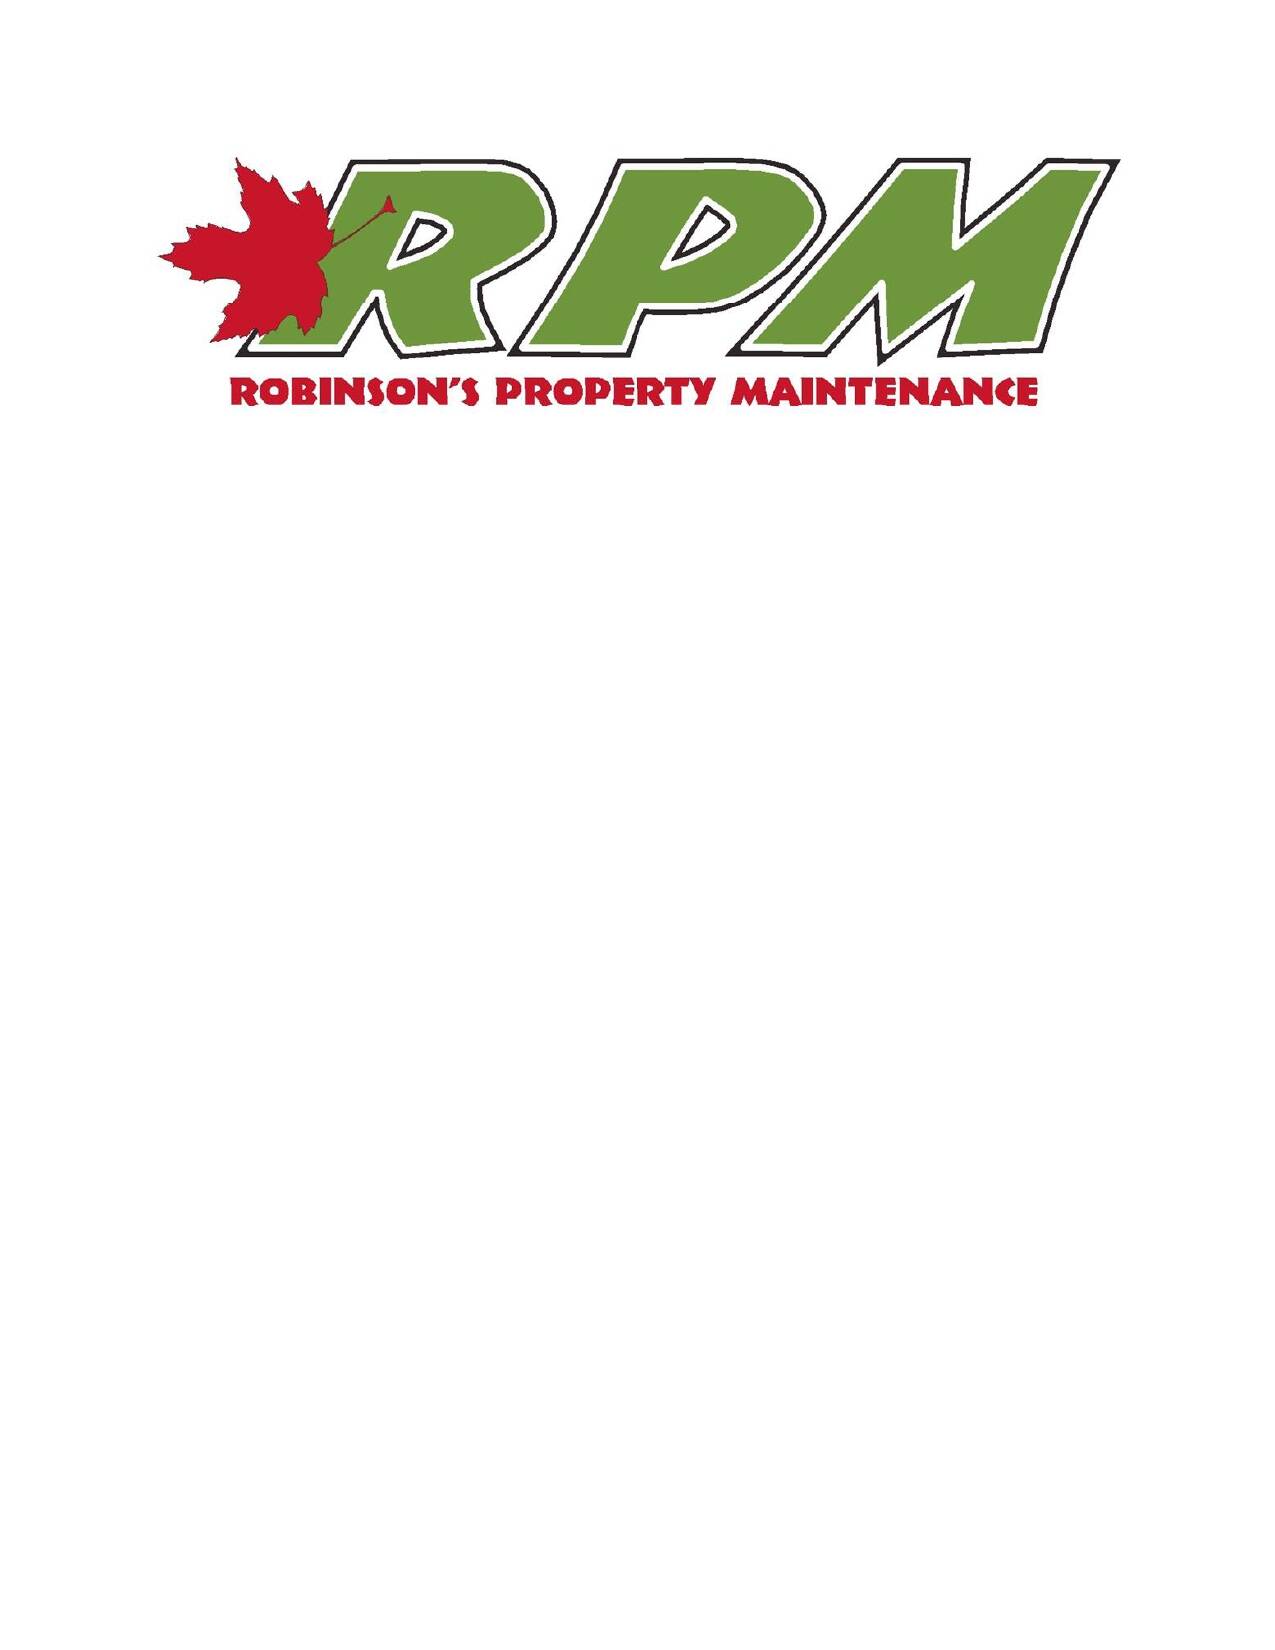 Robinson's Property Maintenance